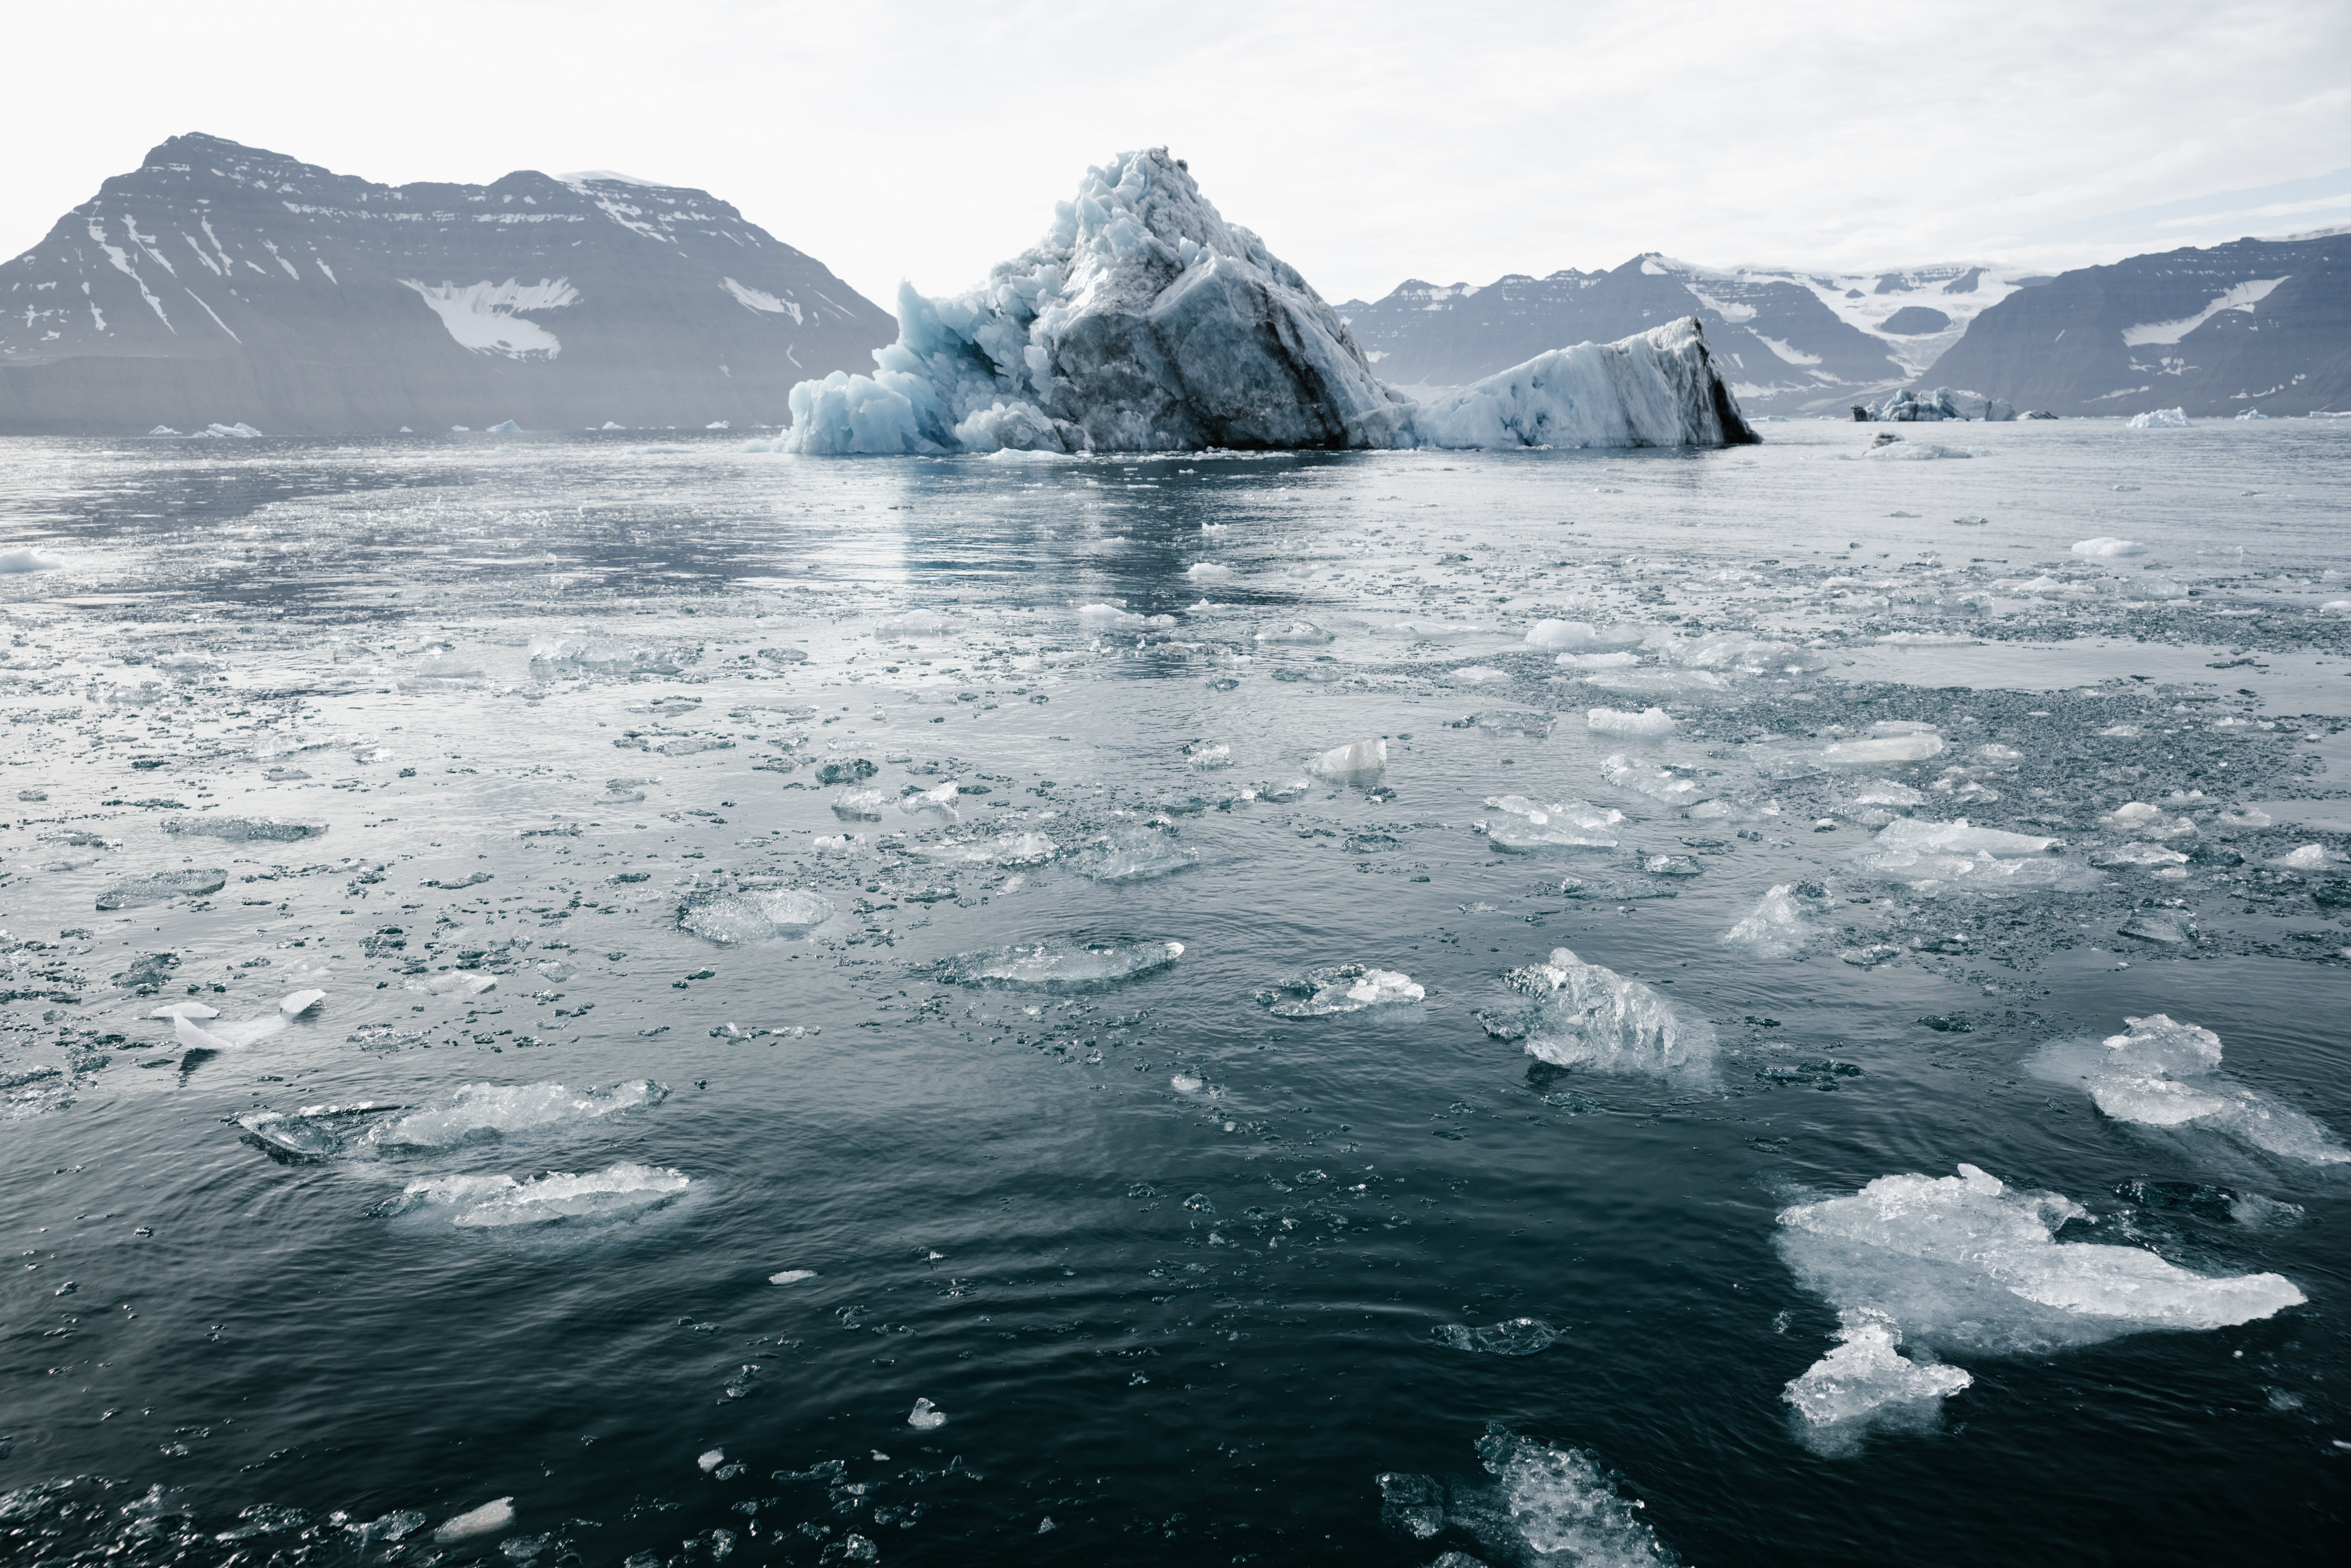 Gratis Fotos de stock gratuitas de agua, antártico, calentamiento global Foto de stock